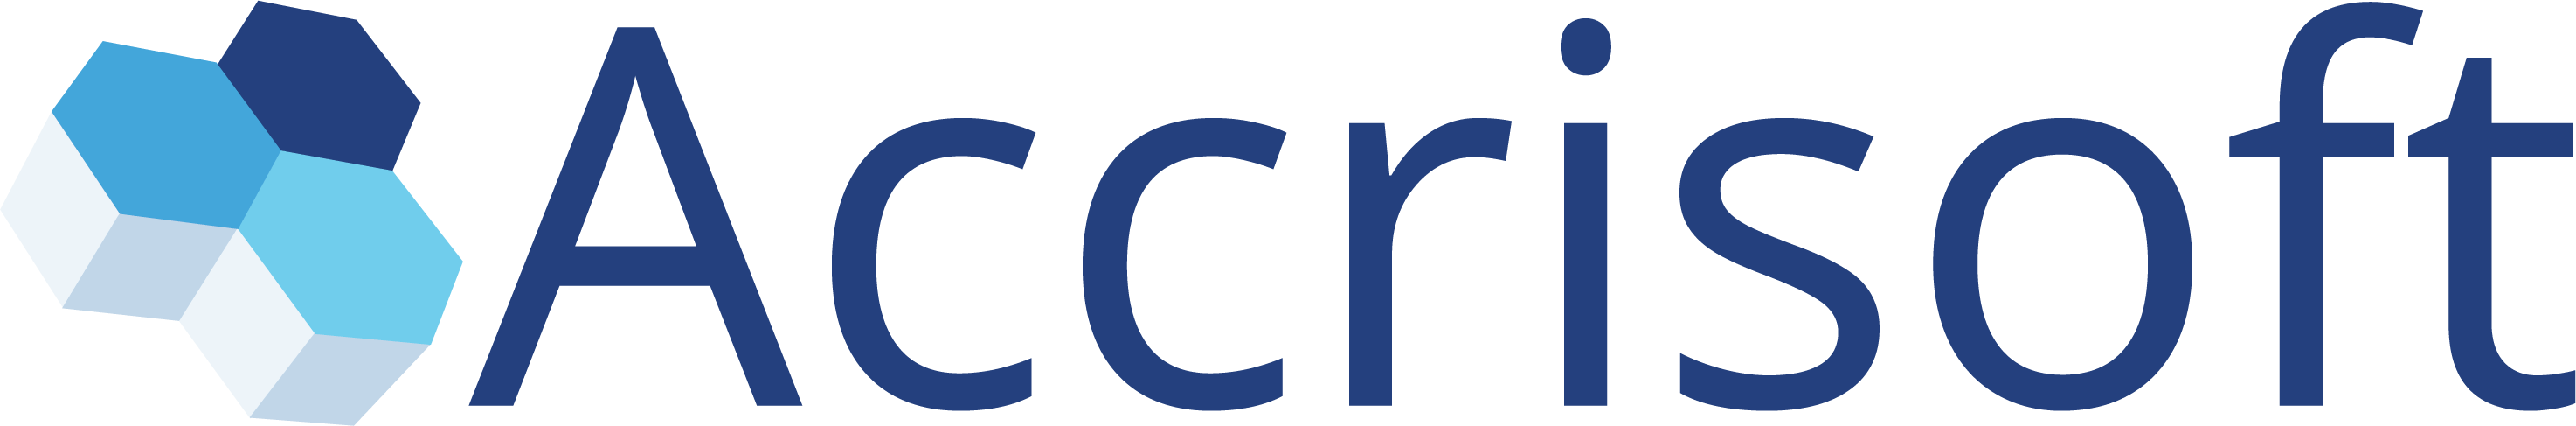 Accrisoft_logo-2